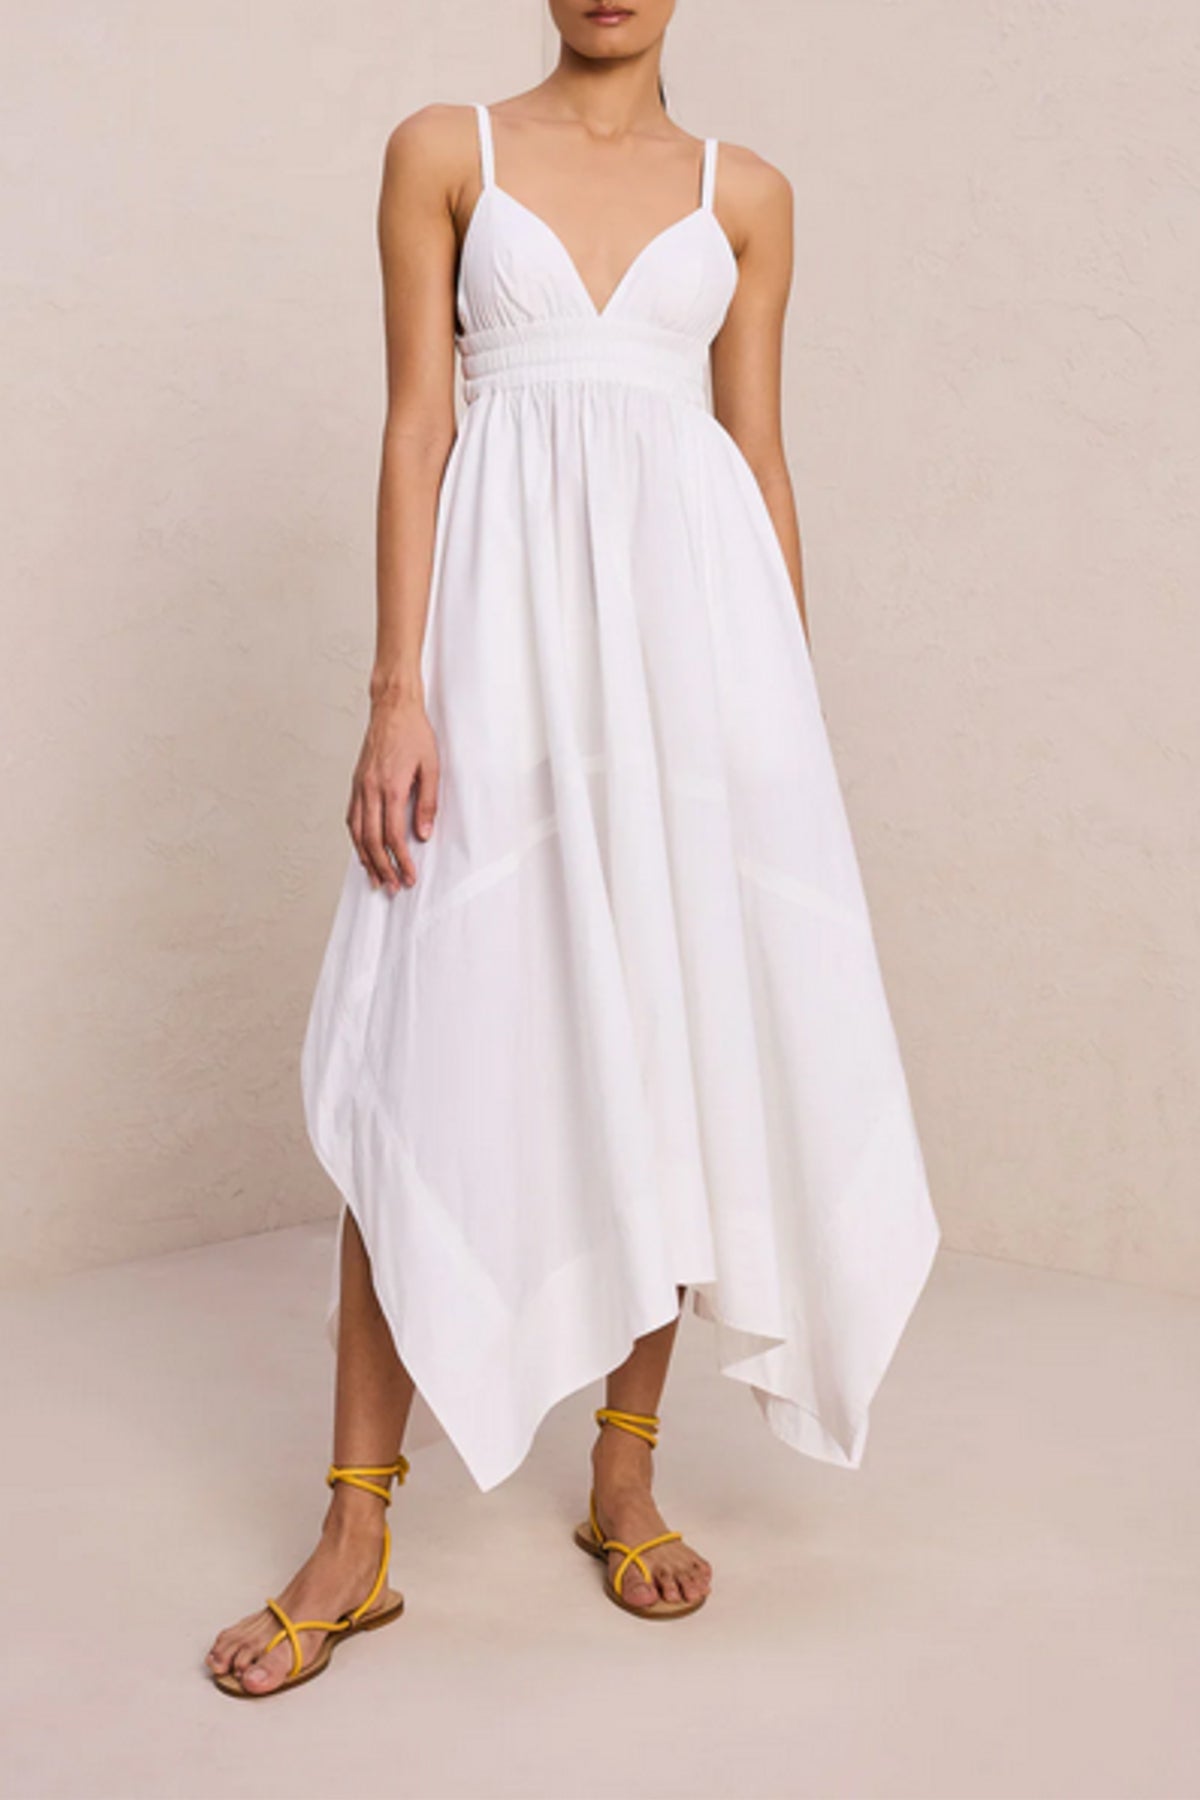 Rosie Handkerchief Maxi Dress in White - shop-olivia.com